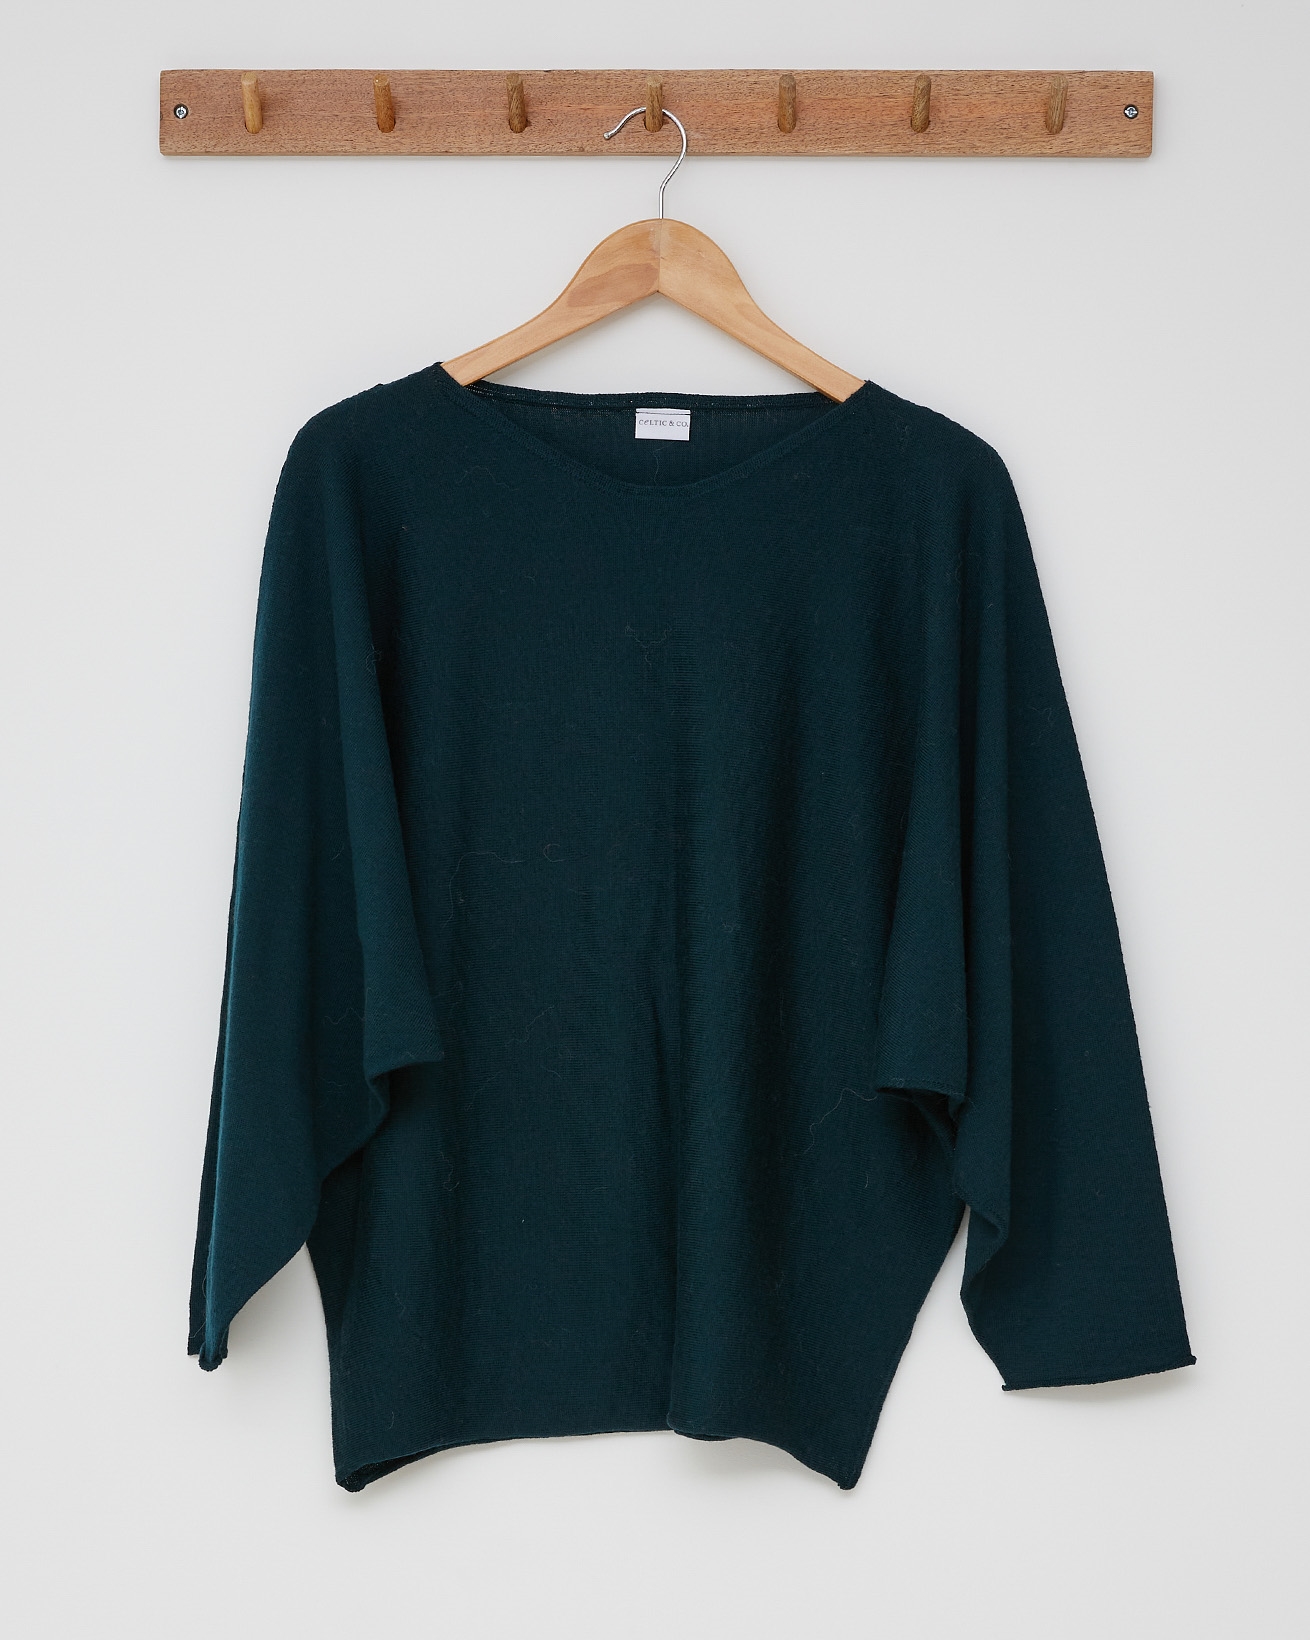 2468-fine knit batwing jumper - size small - forest green -.jpg